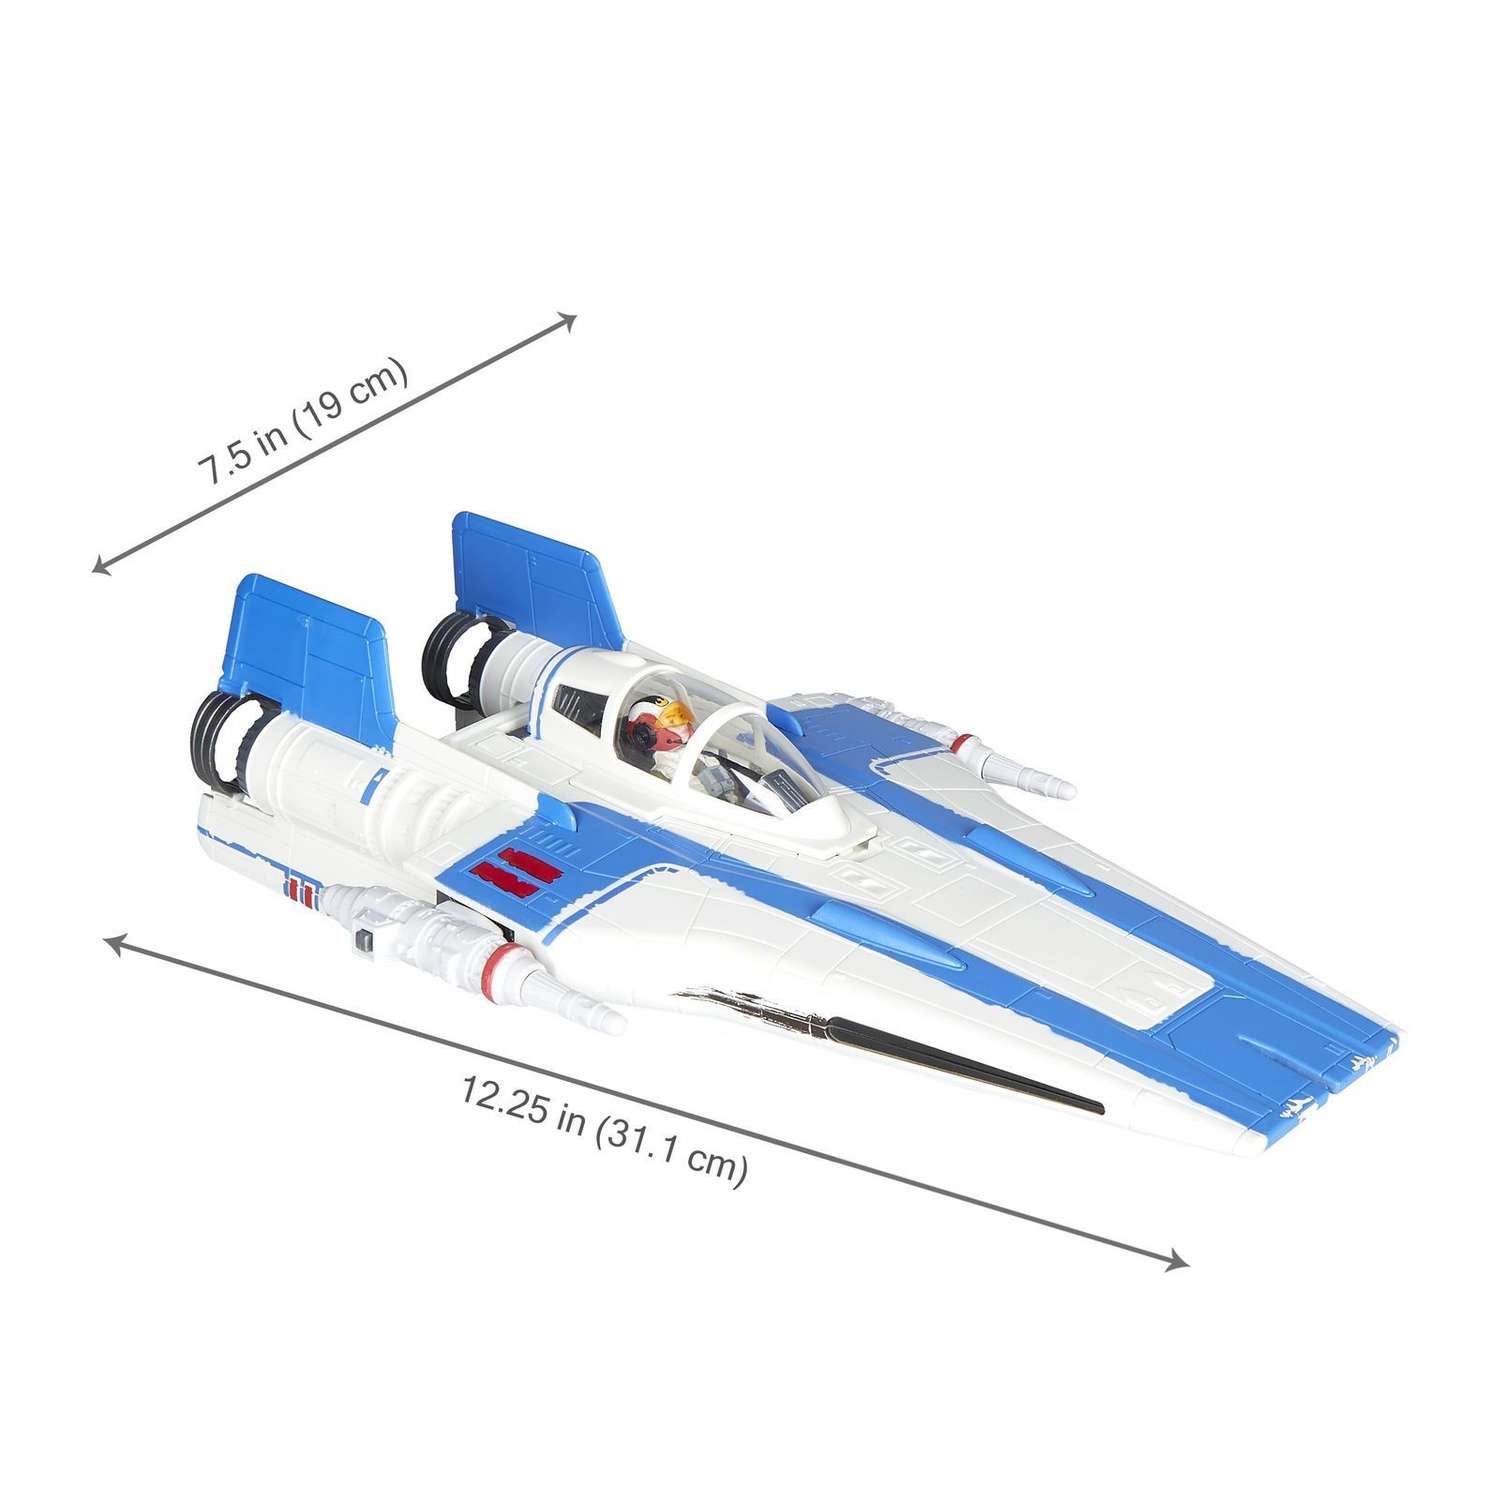 Игрушка Star Wars (SW) Транспорт Звездный истребитель a wing E1264EU4 E0326EU4 - фото 12